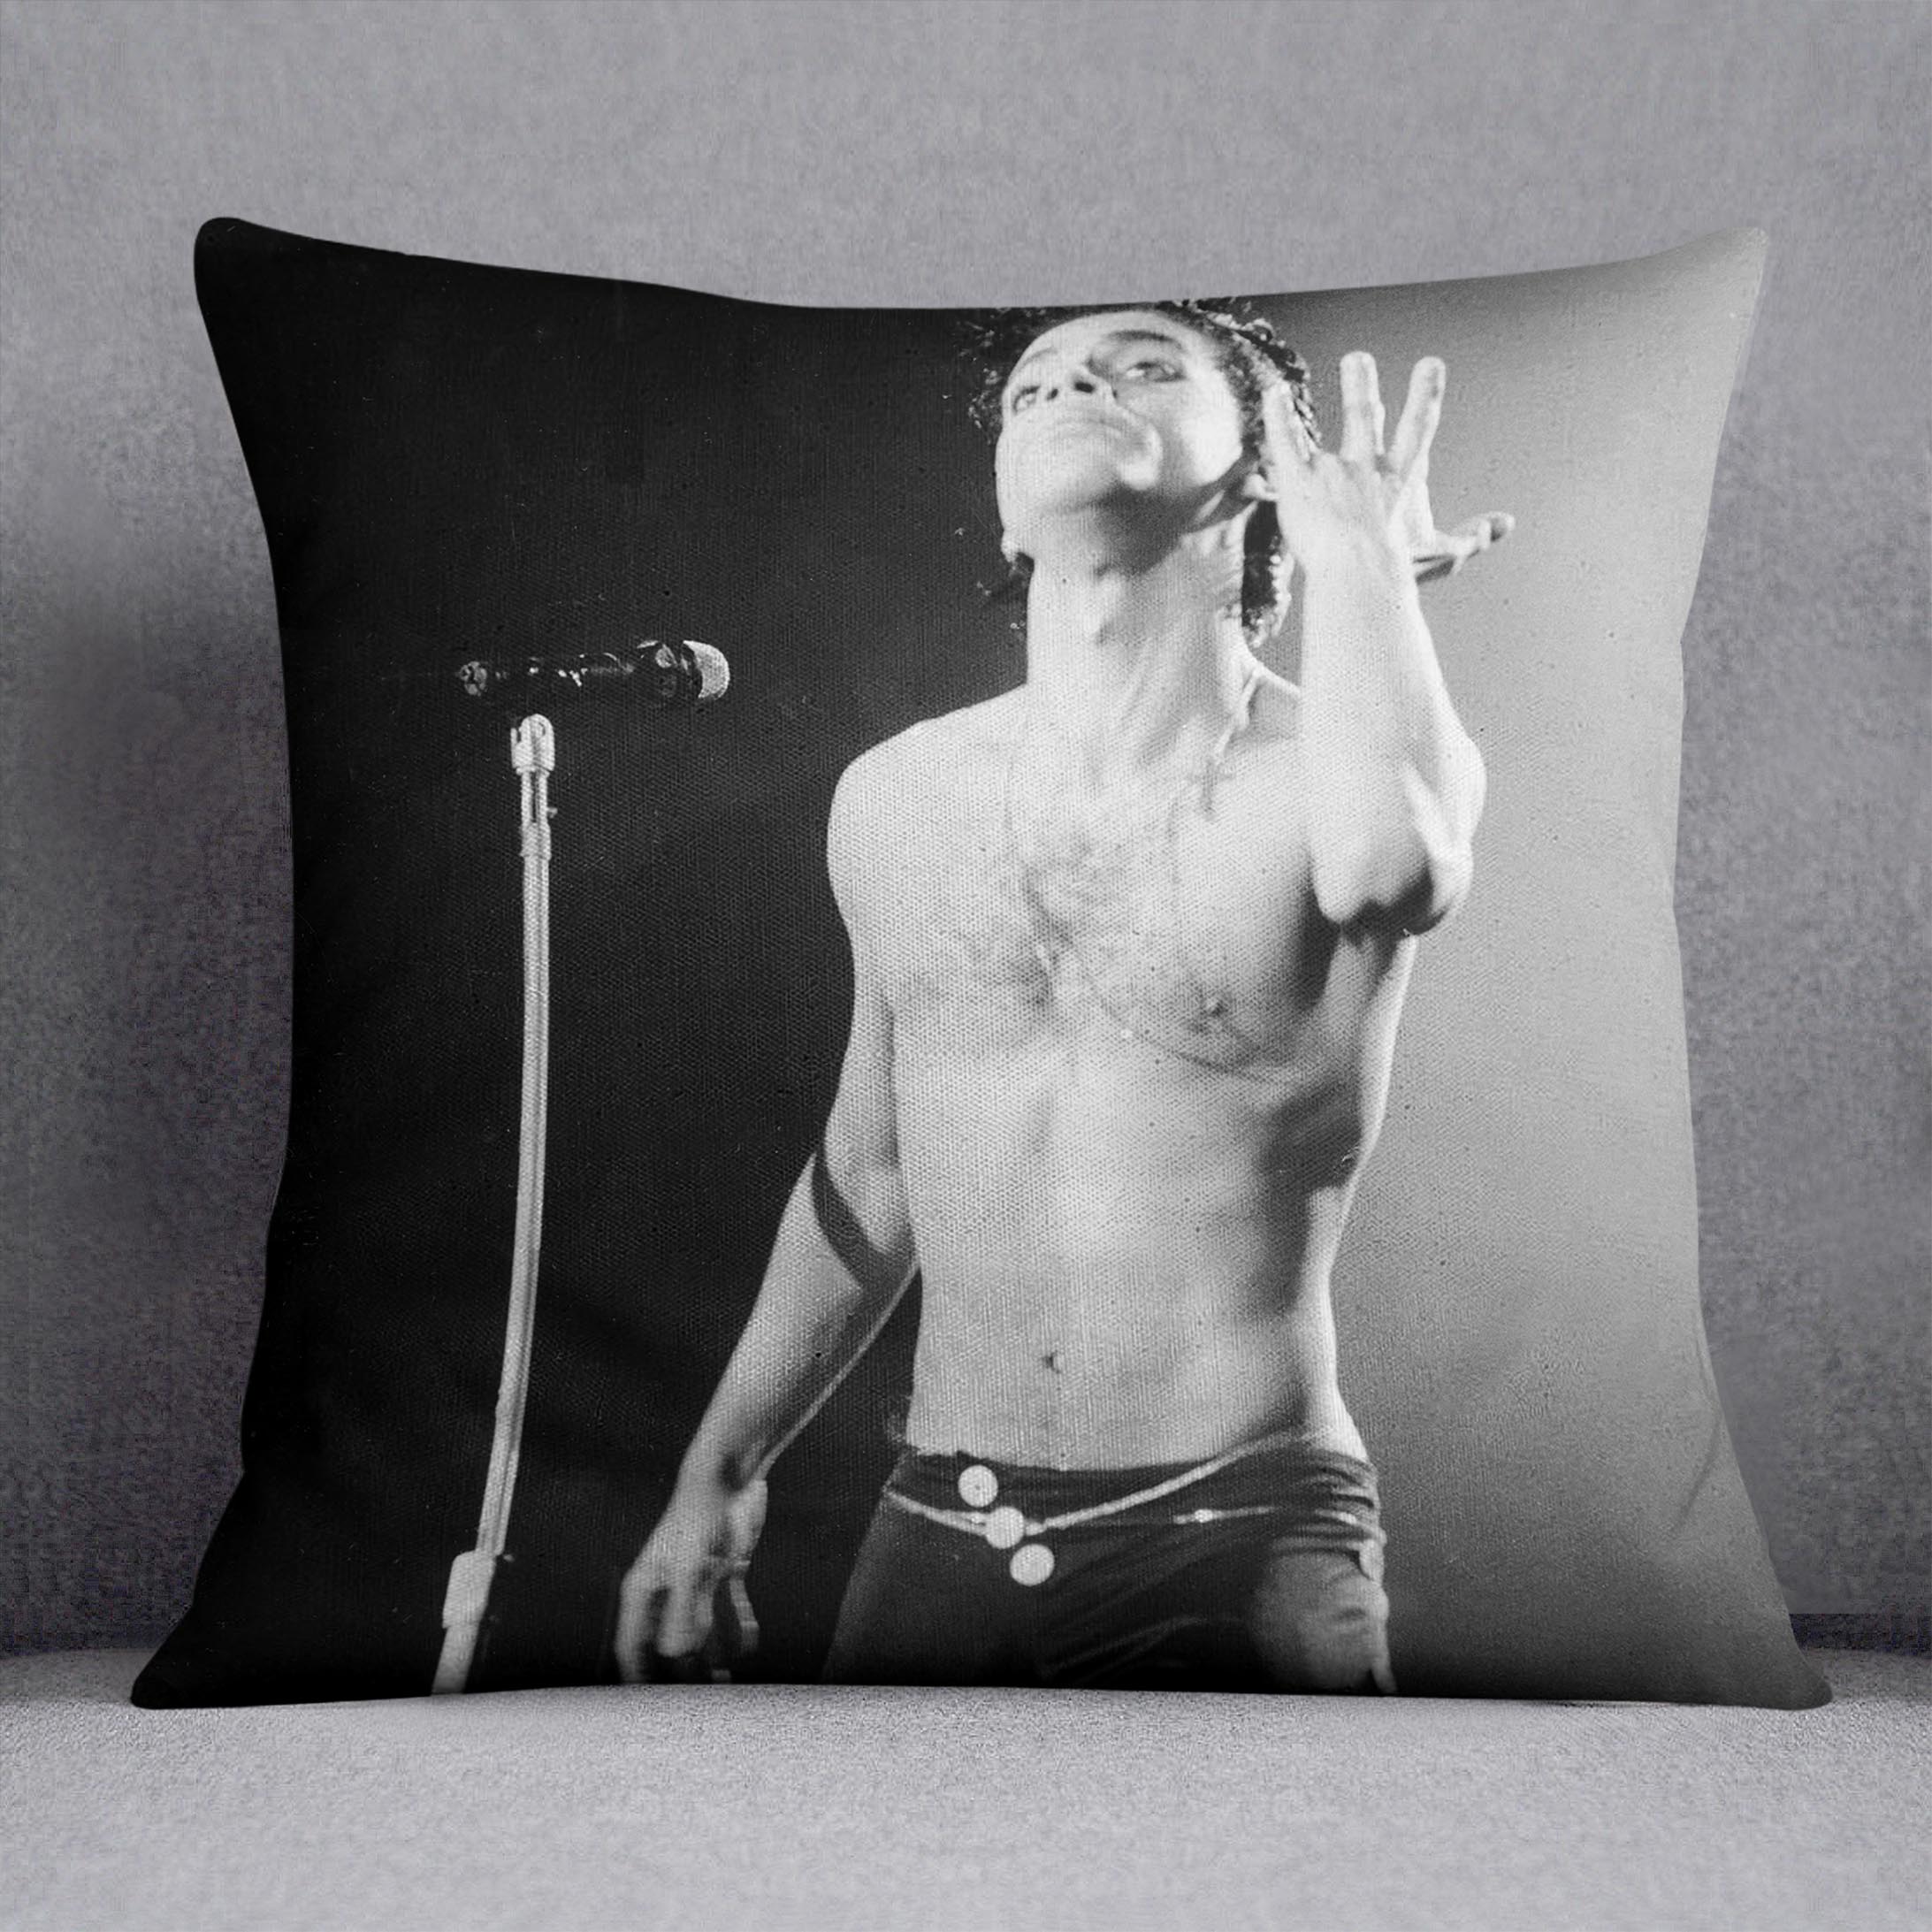 Prince live Cushion